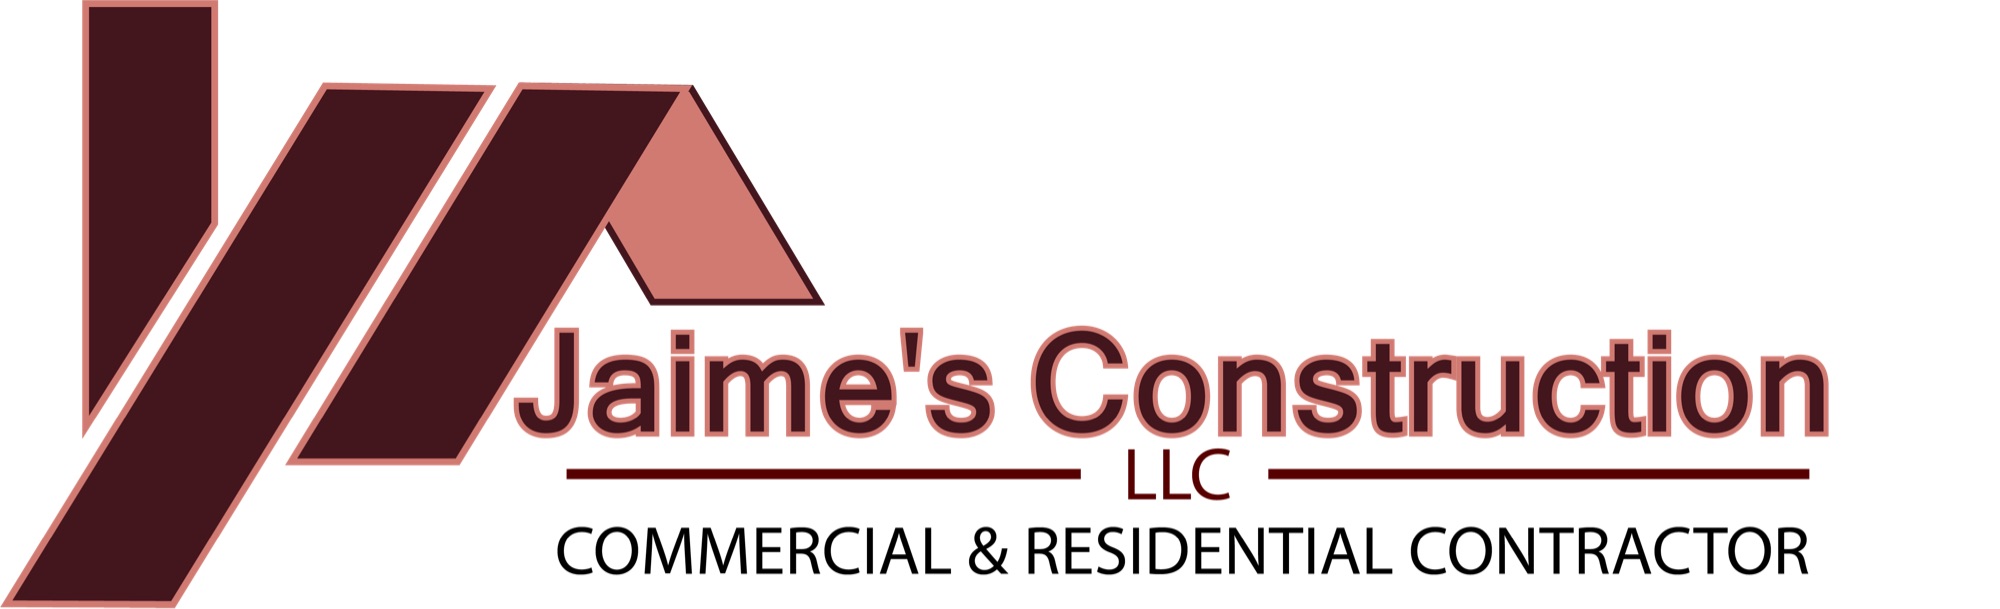 Jaime's Construction, LLC Logo